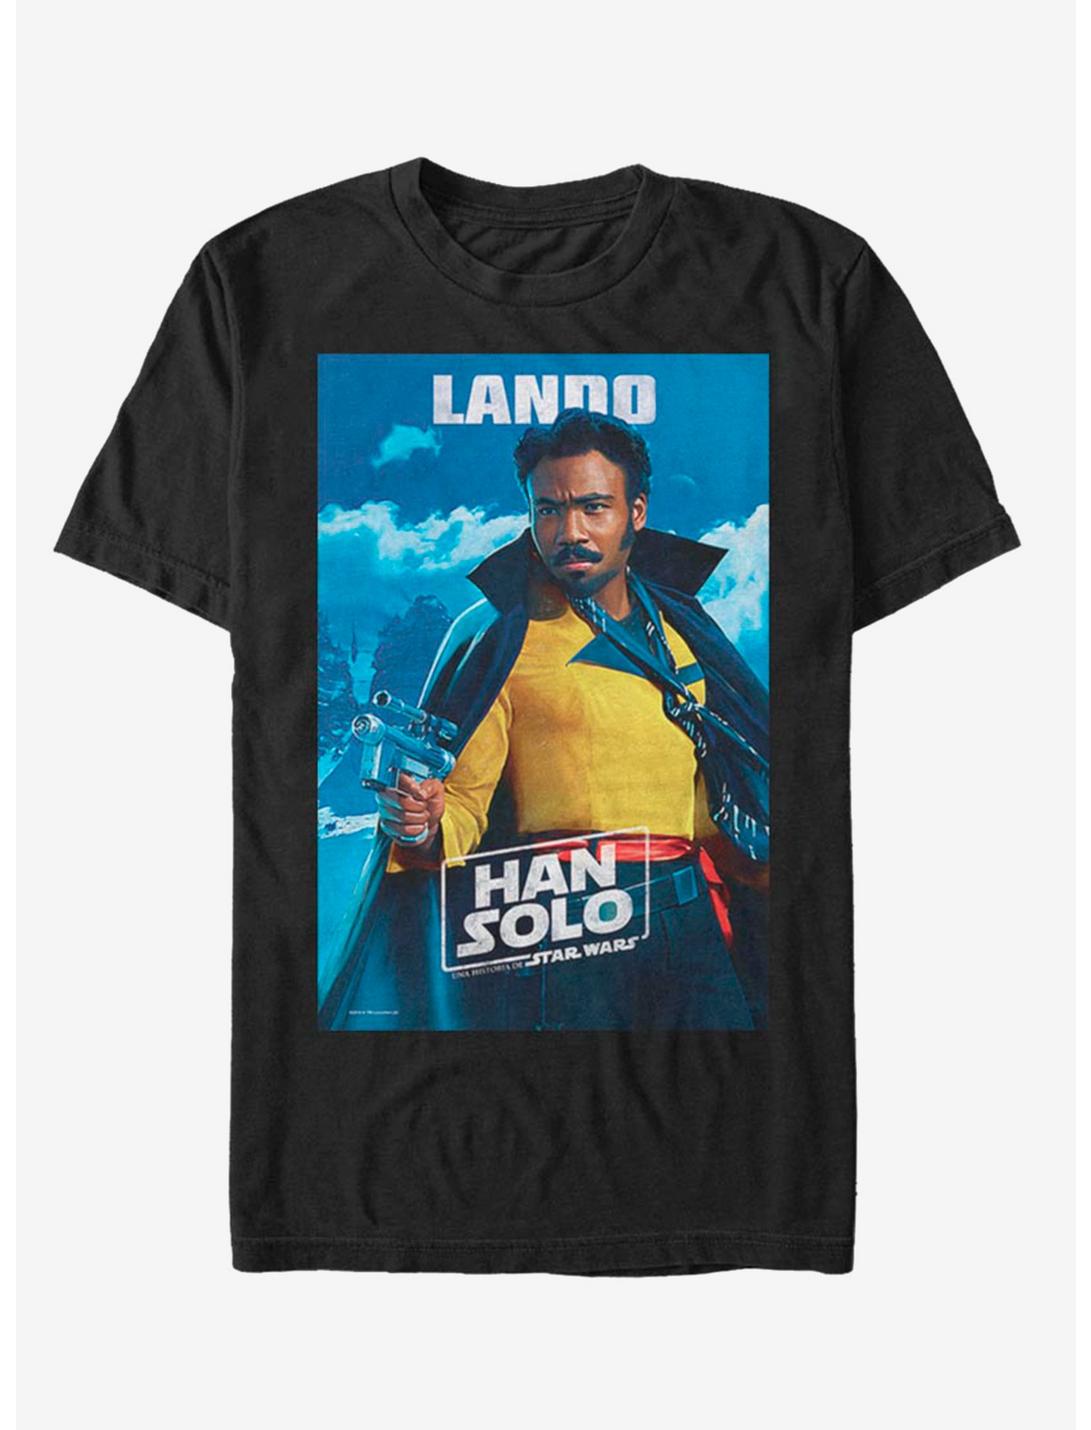 Solo: A Star Wars Story Lando Poster T-Shirt, BLACK, hi-res